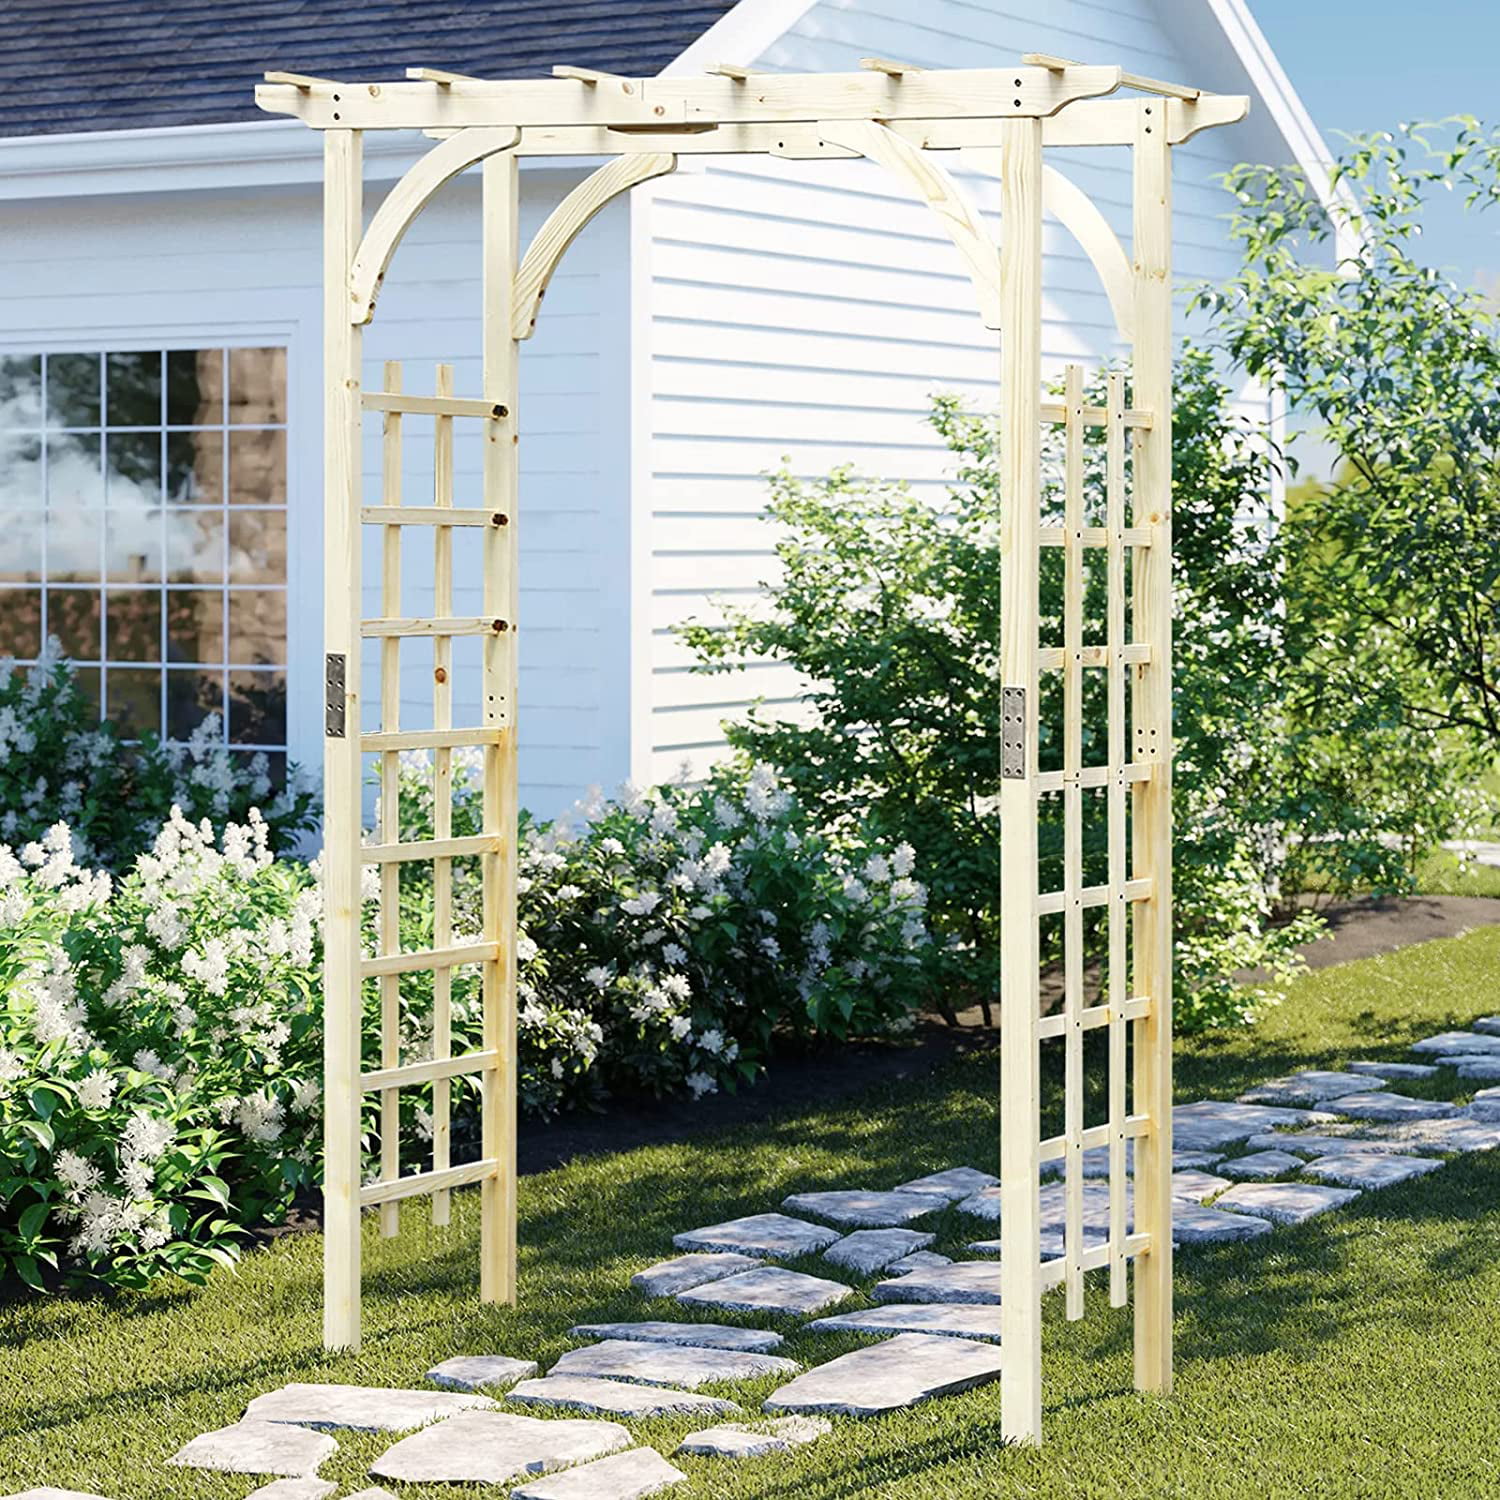 Details about   80in Wedding Arch Decor Trellis Patio Pergola Gate Outdoor Garden Athens Arbor 